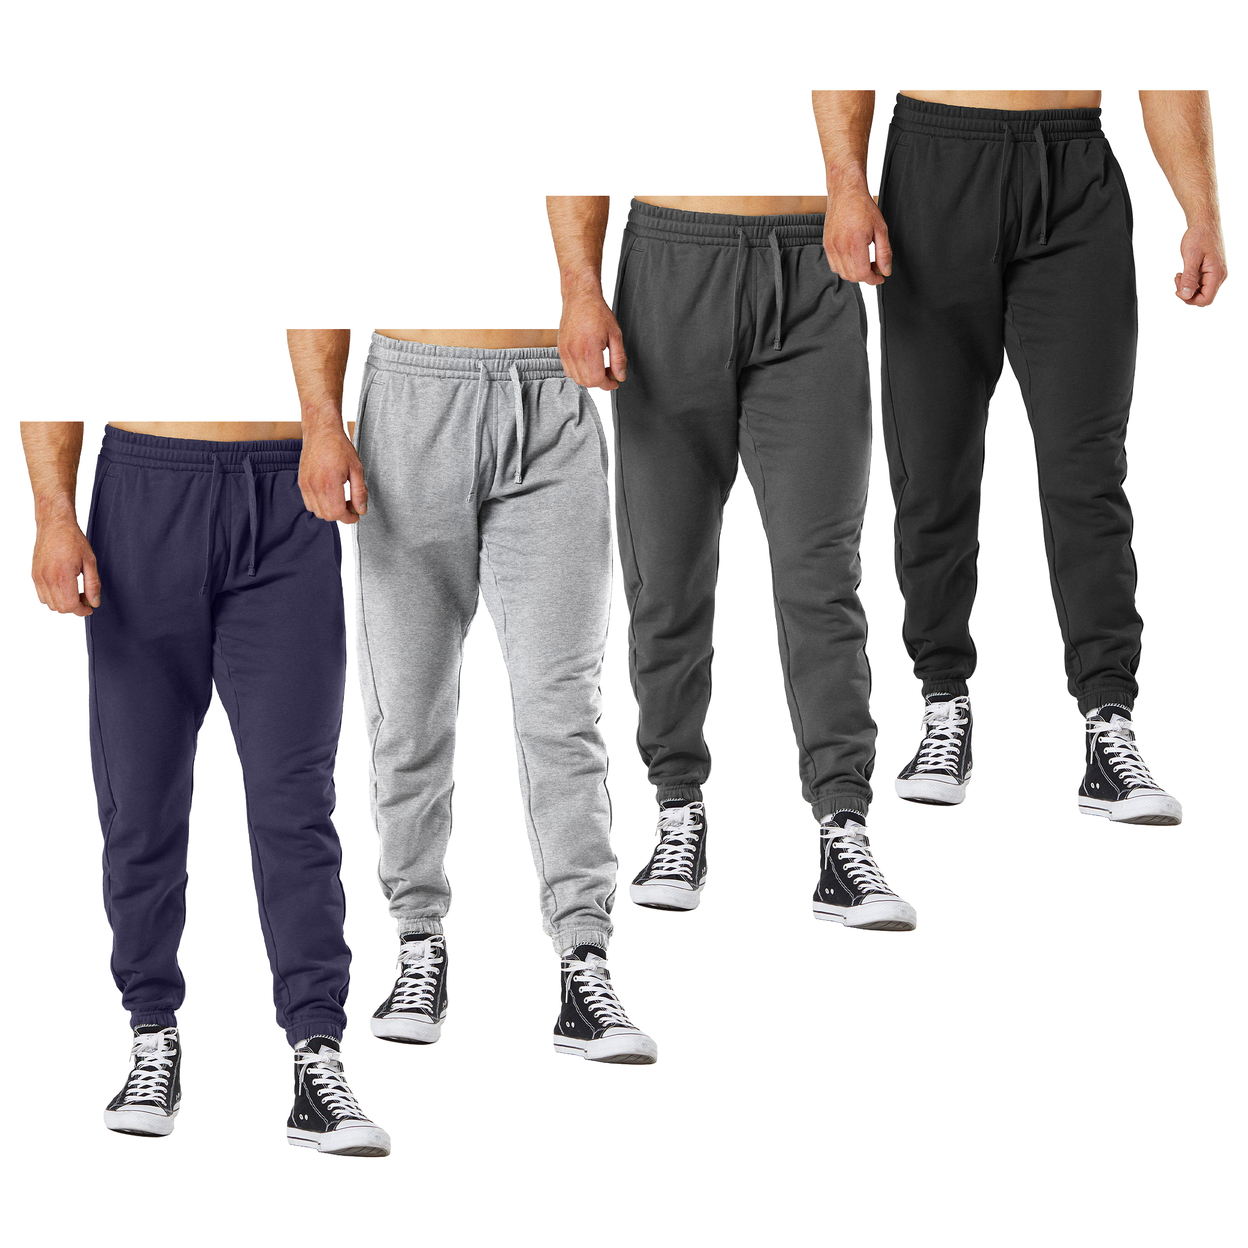 Multi-Pack: Men's Ultra-Soft Cozy Winter Warm Casual Fleece-Lined Sweatpants Jogger - 1-pack, Medium